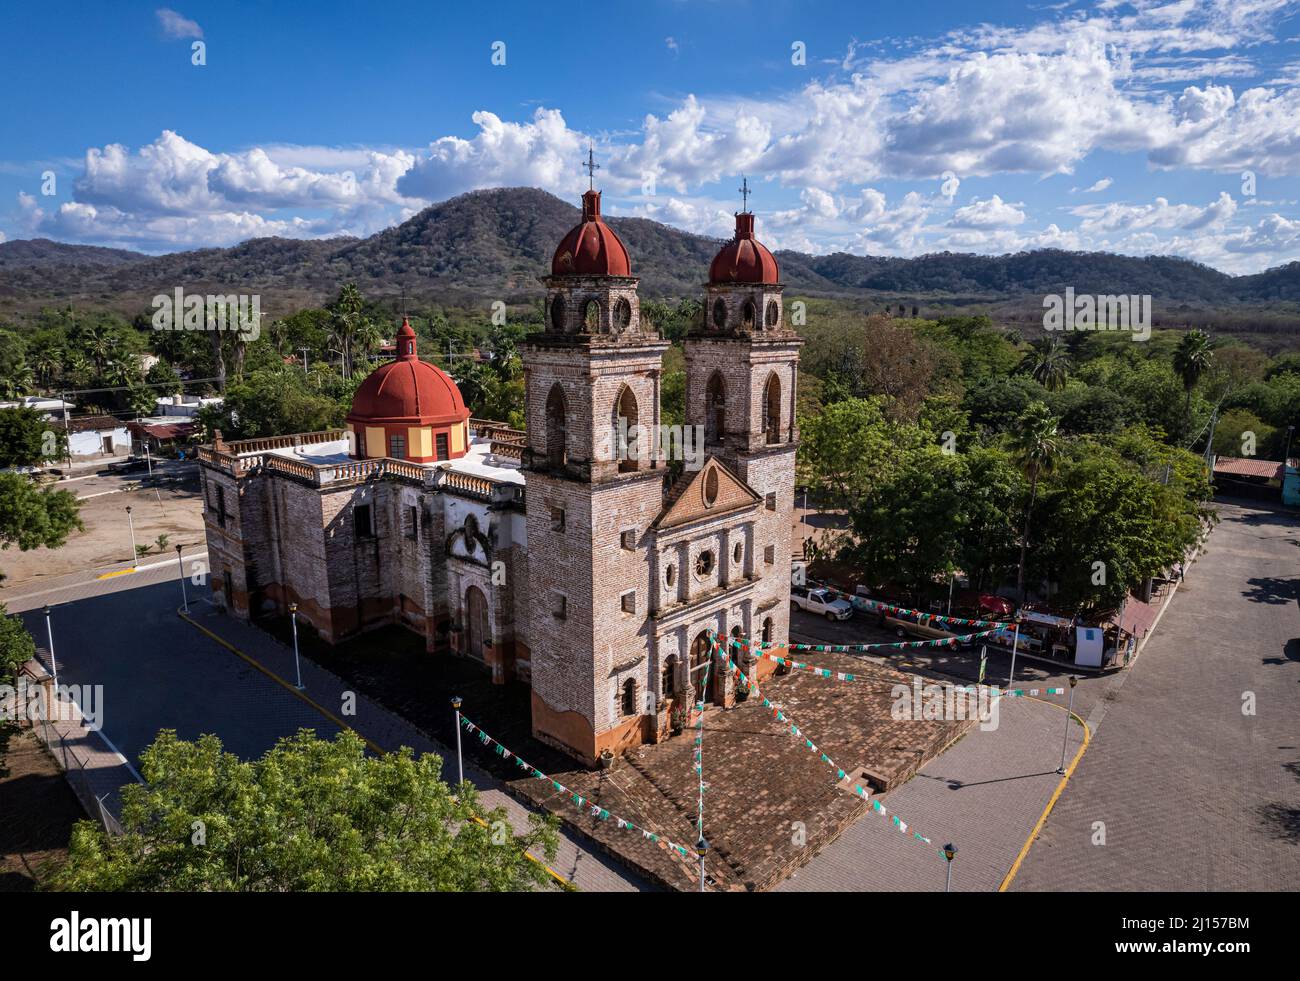 The church of the village of Imala near the city of Culiacan in Sinaloa, Mexico. Stock Photo